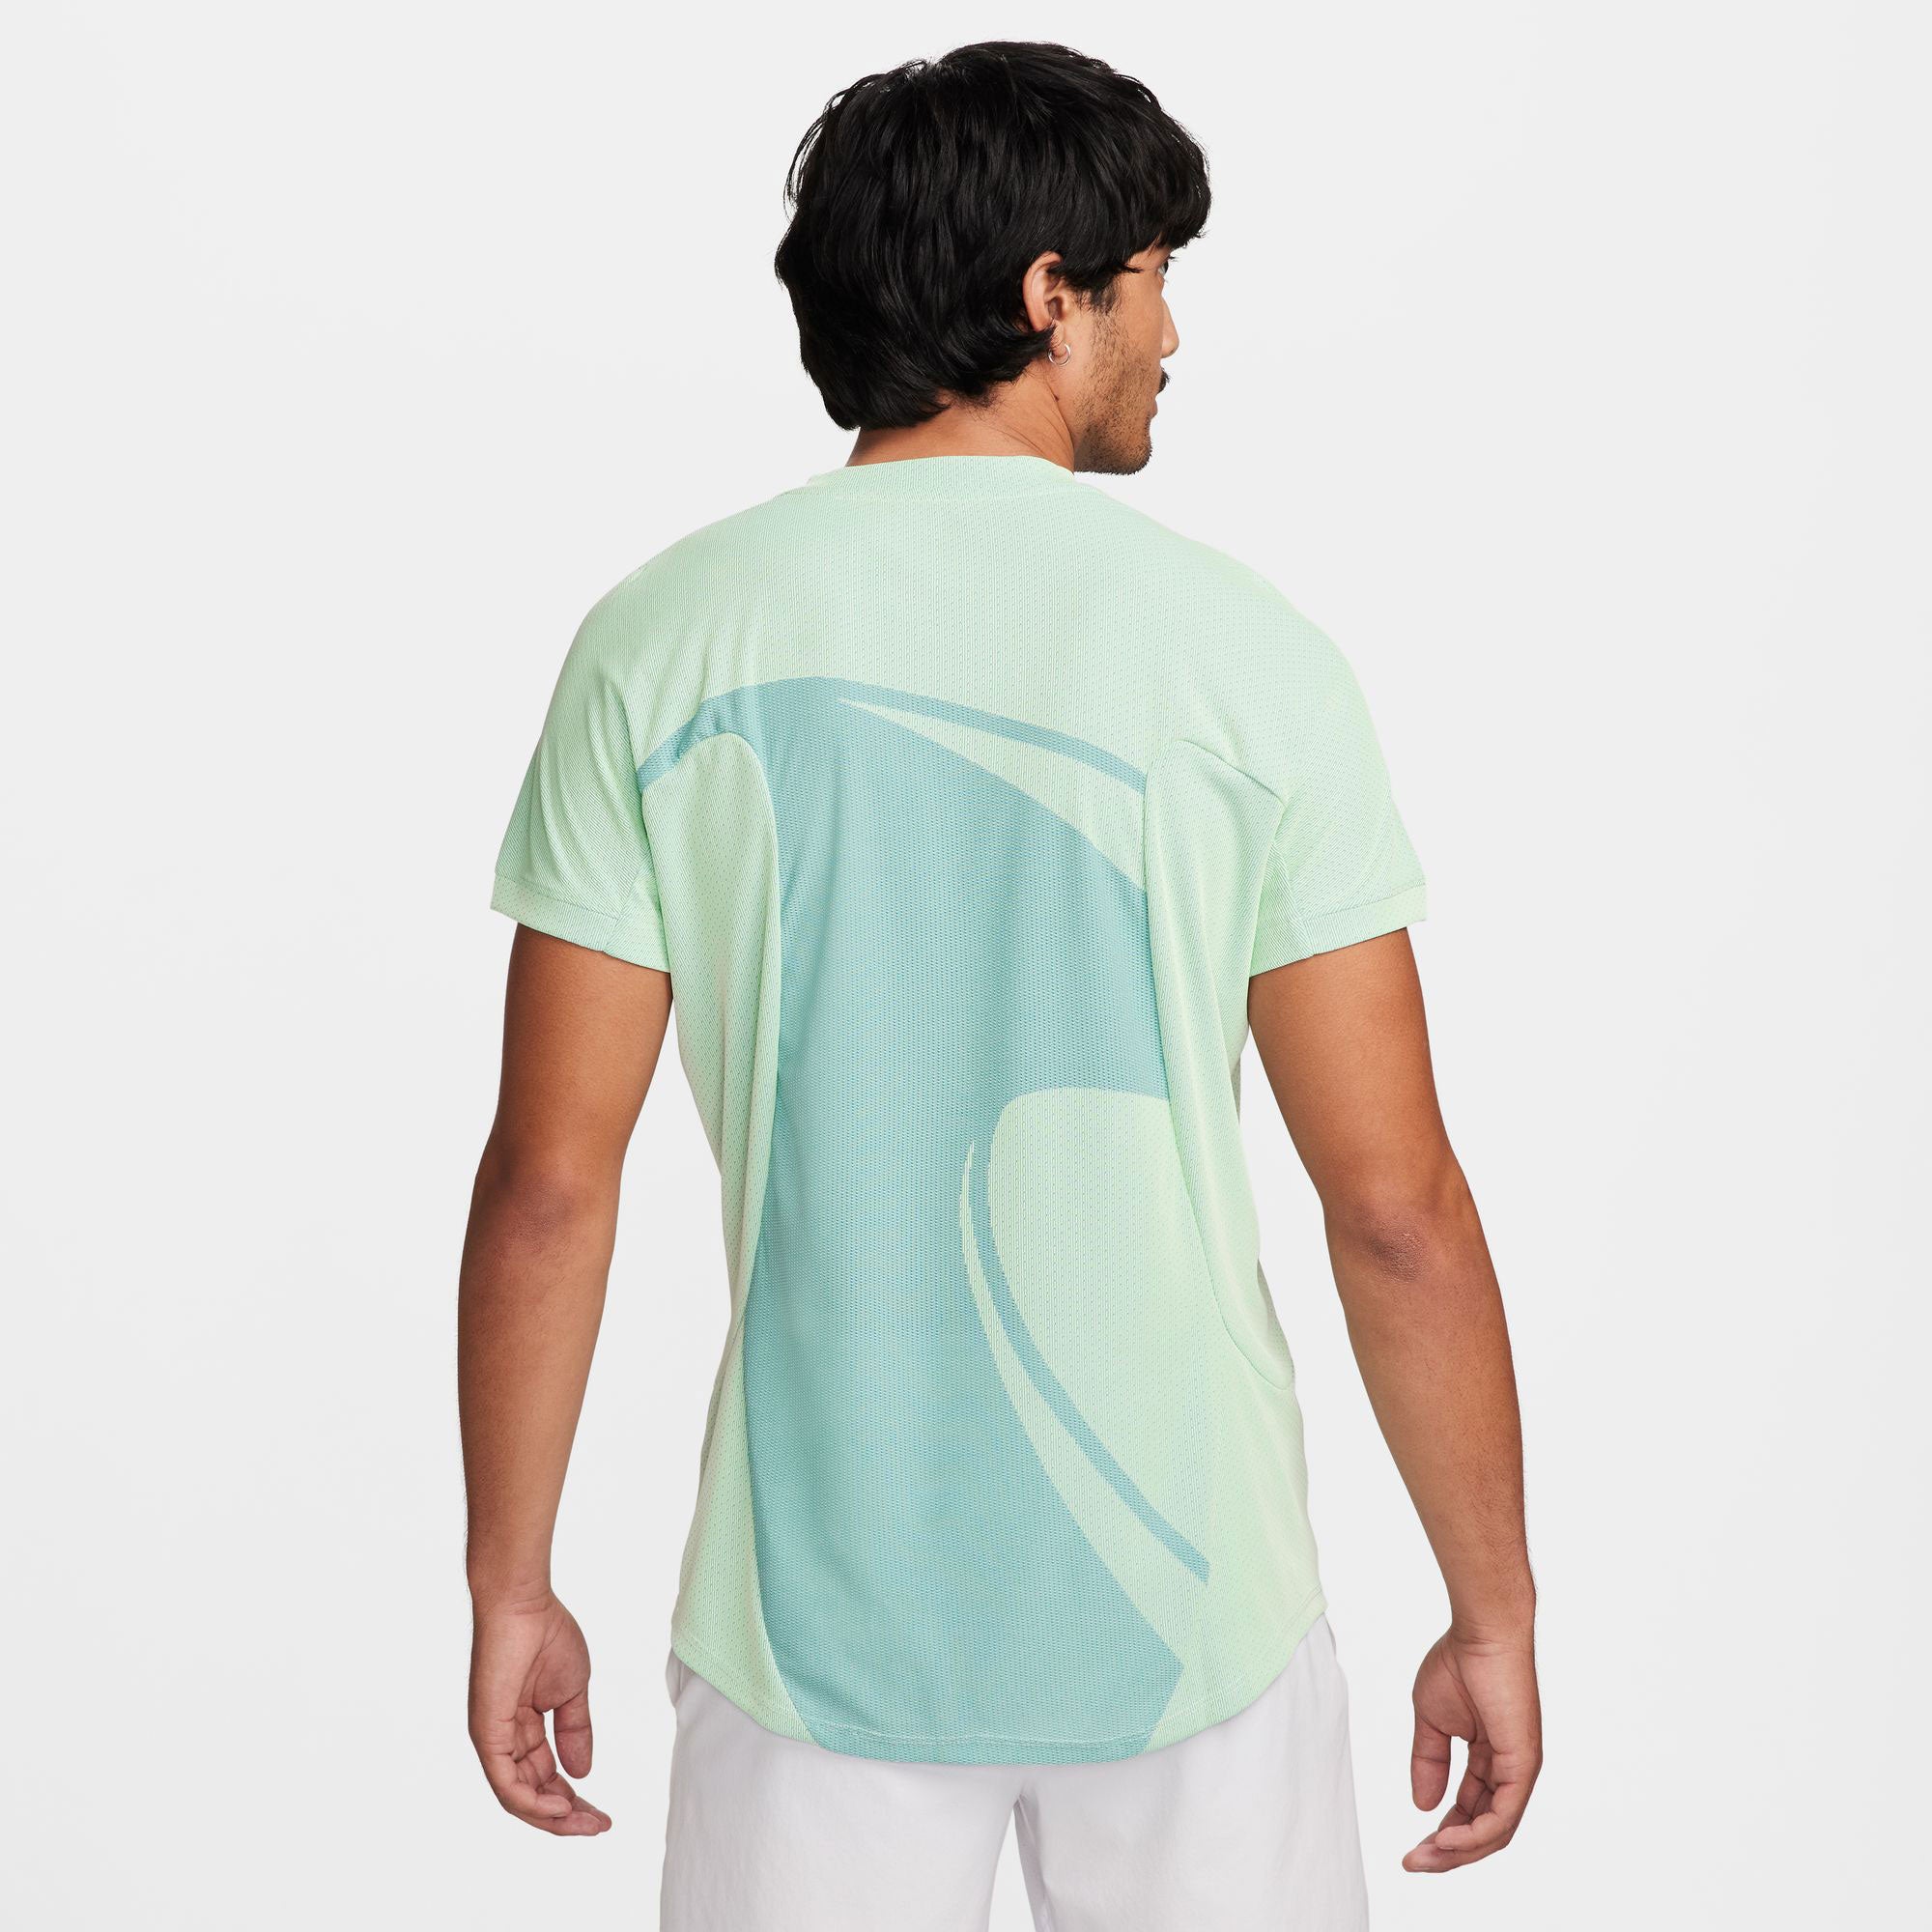 Nike Rafa Men's Dri-FIT ADV Tennis Shirt - Blue (2)